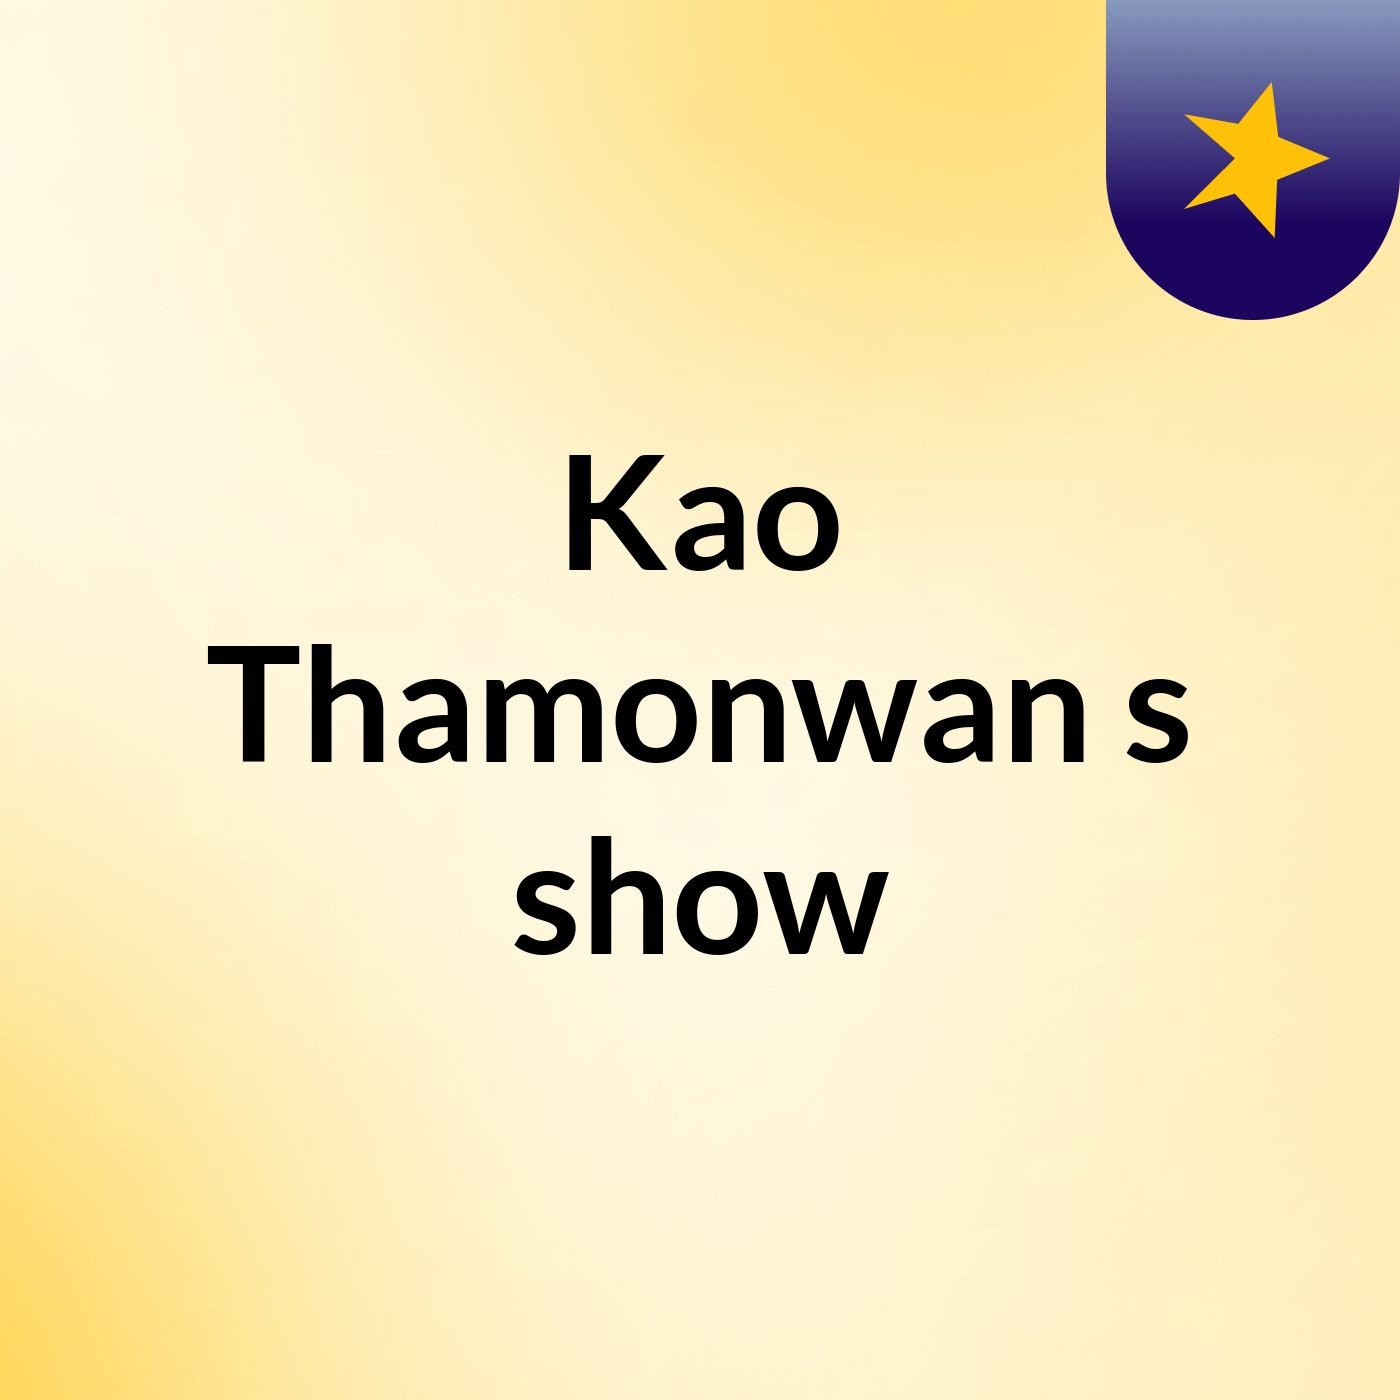 Kao Thamonwan's show